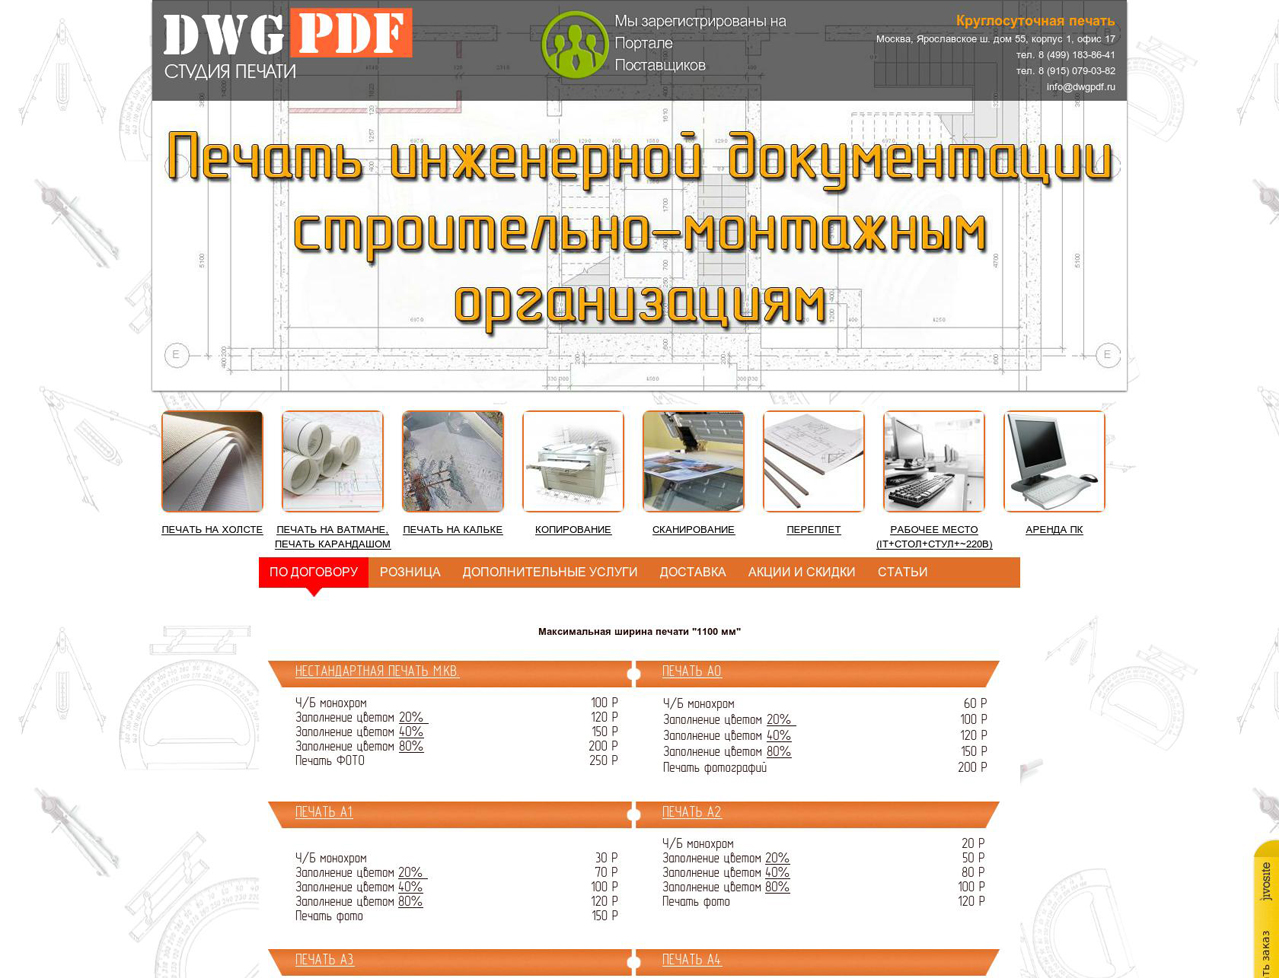 dwgpdf.ru - разработка, администрирование, продвижение, хостинг